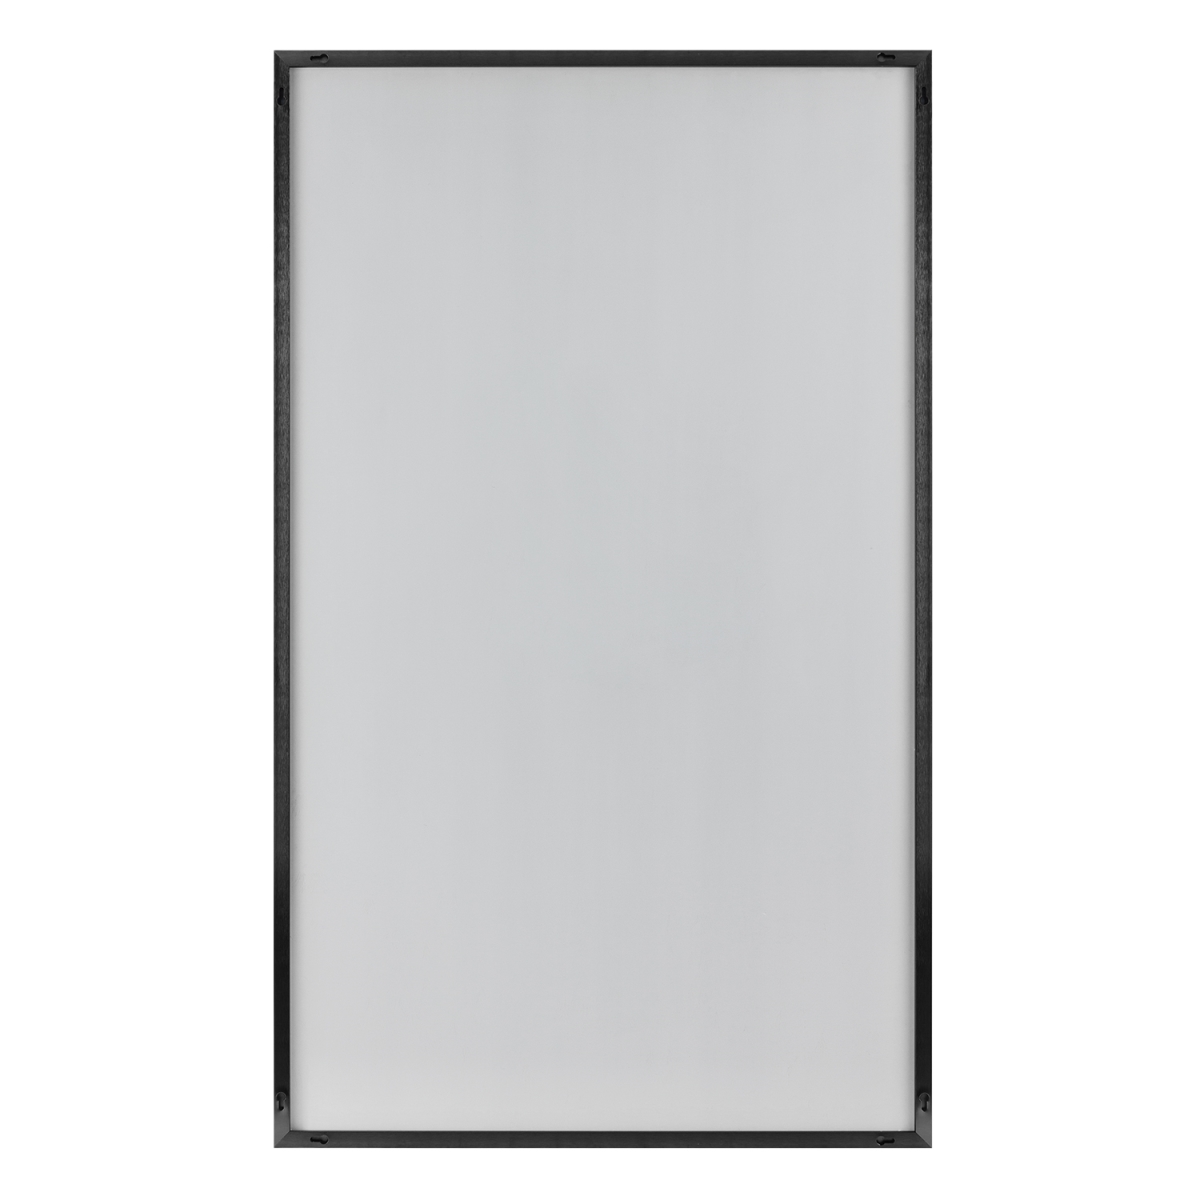 UPC 808230000049 product image for 397383 Jumbo Minimal Black & Clear Wall Mirror | upcitemdb.com